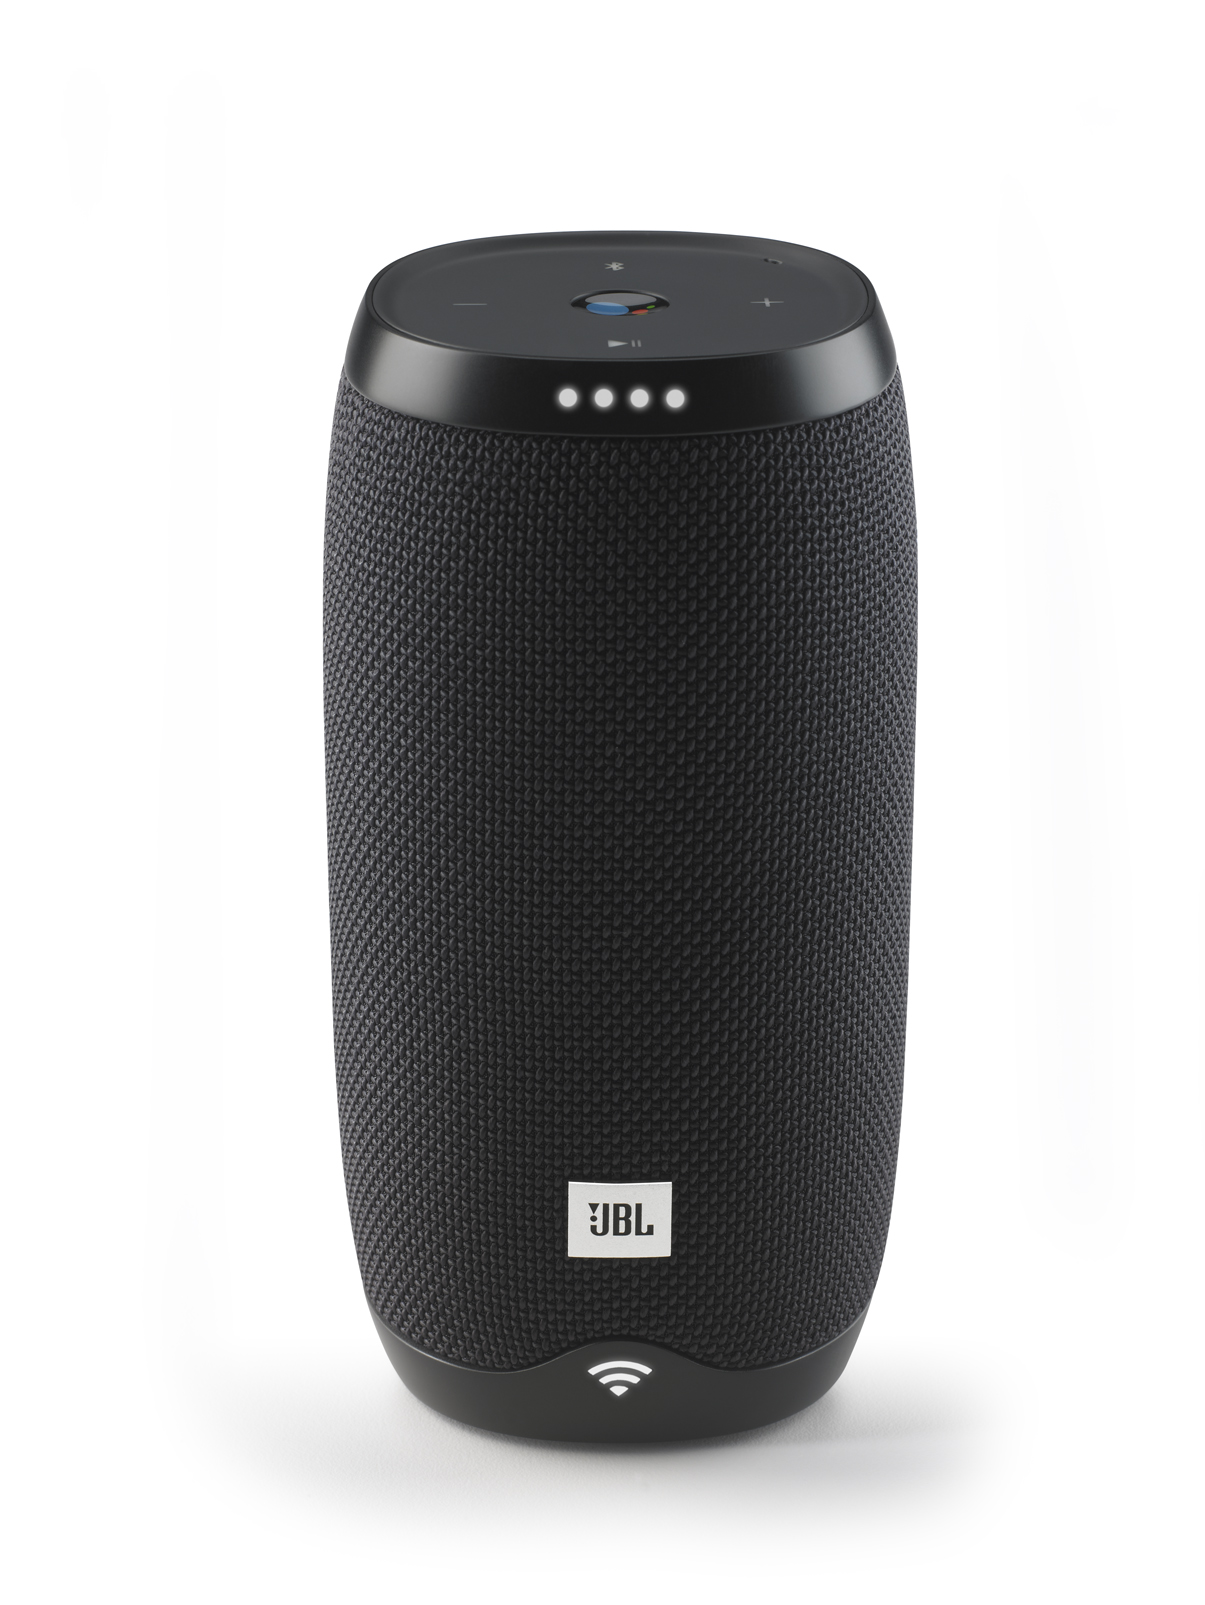 JBLLINK10BLKUK, Voice-activated portable speaker, black